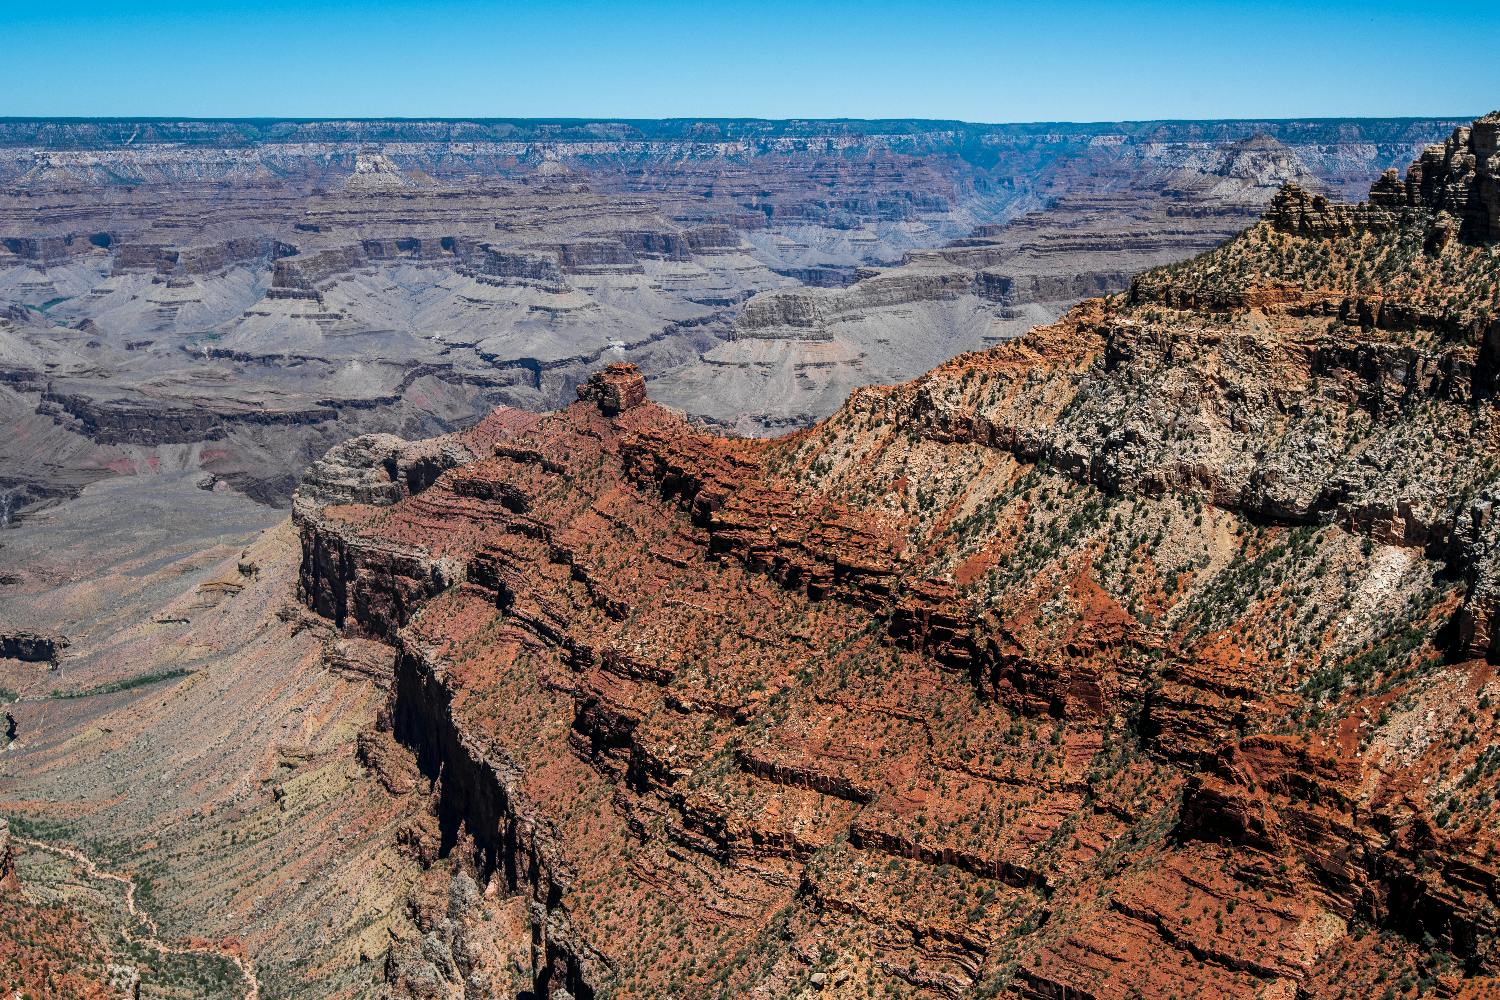 Grand Canyon south rim self-driving, walking and shuttling tour